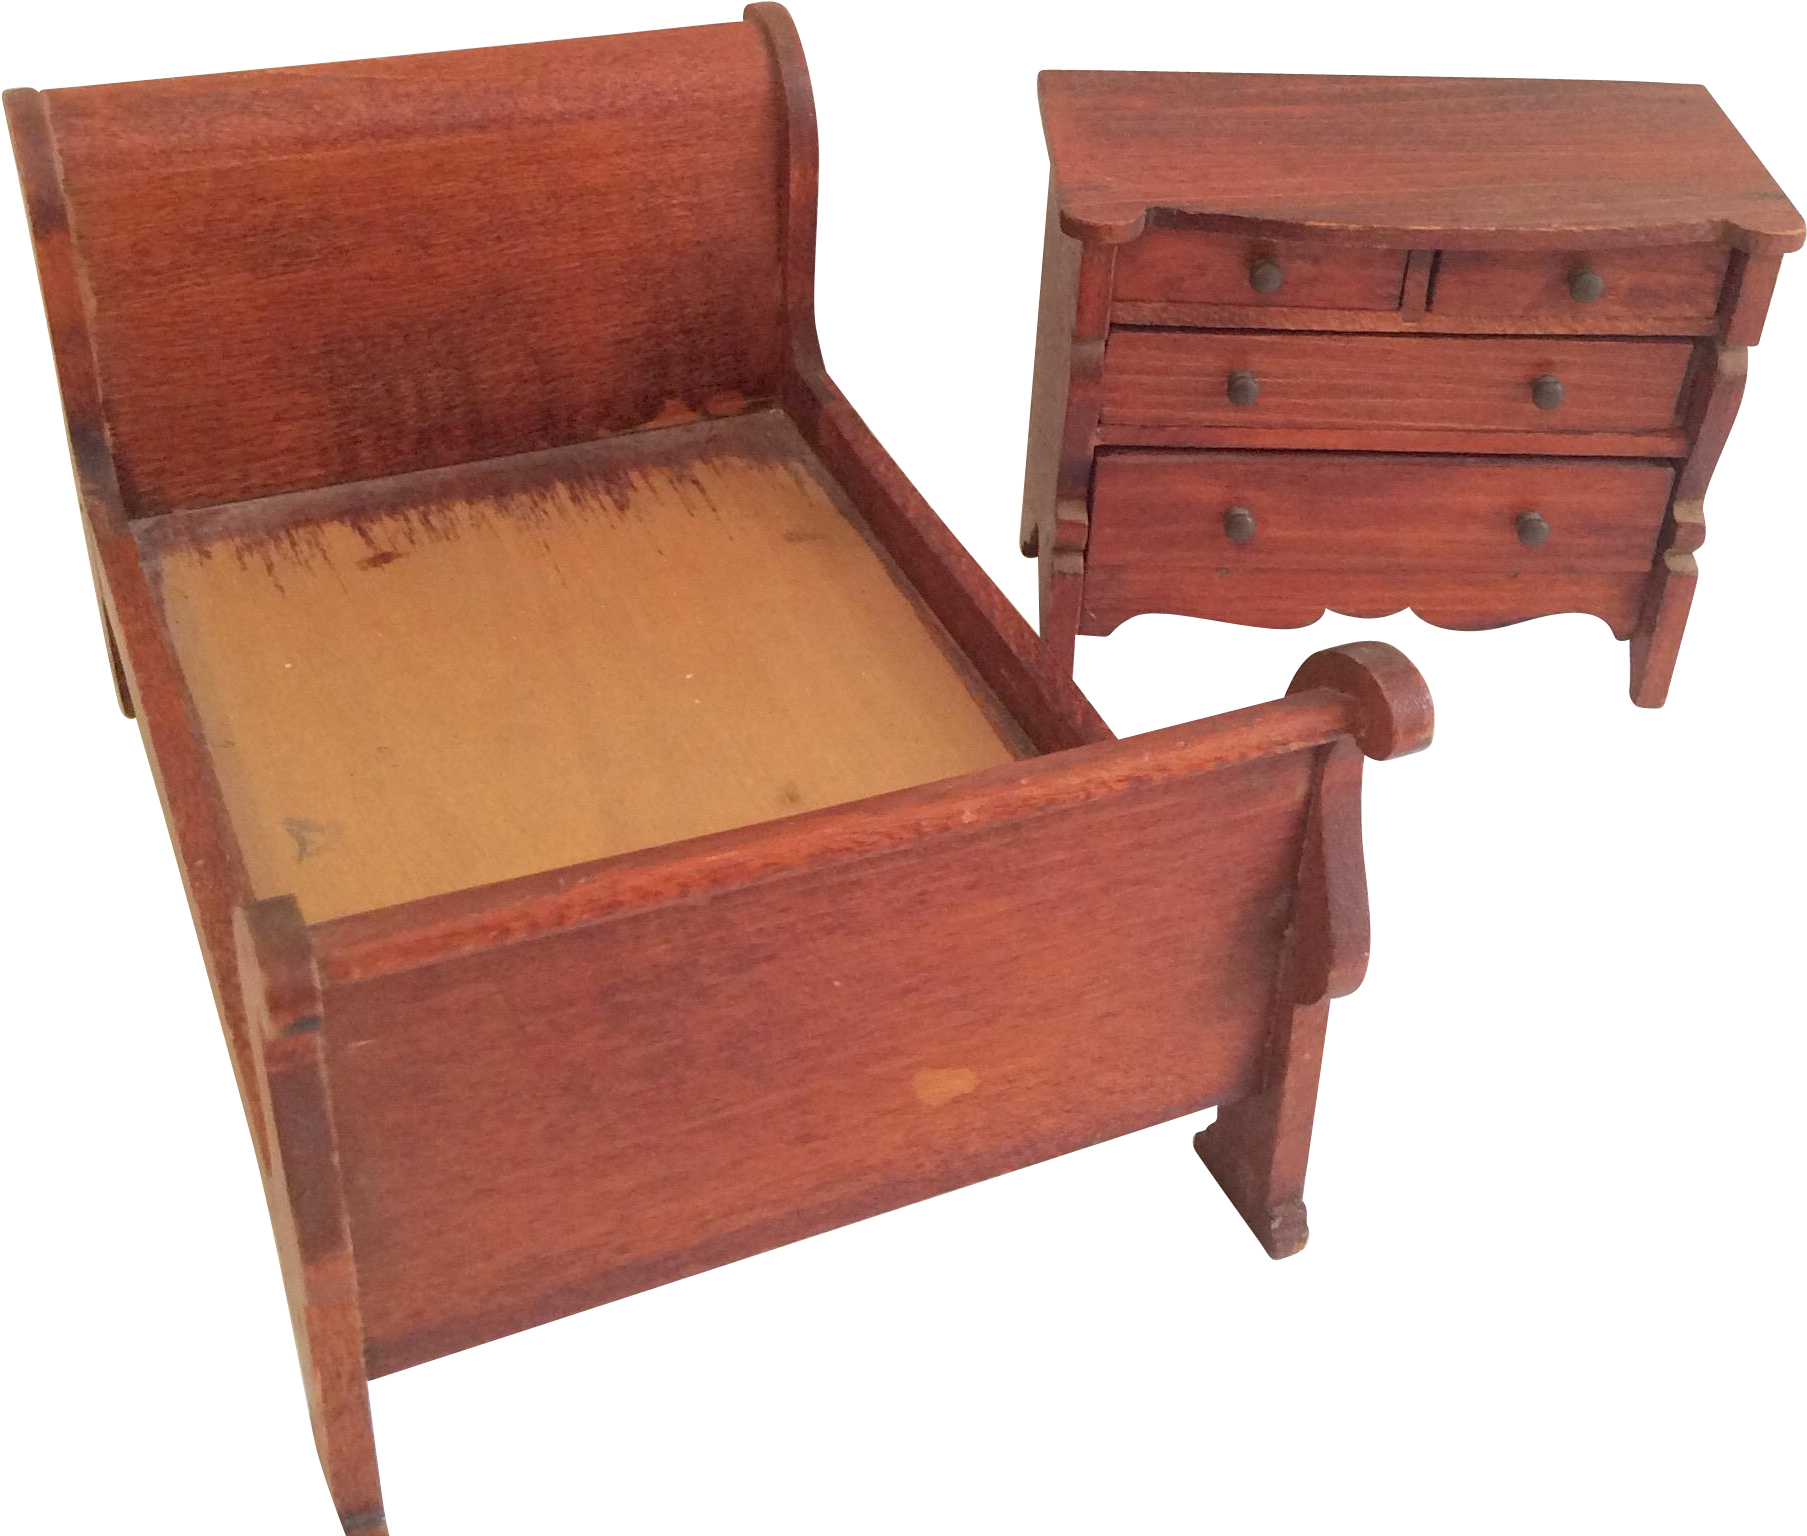 Vintage Miniature Marked Tynietoy Sleigh Bed Bureau - Club Chair (1806x1806)